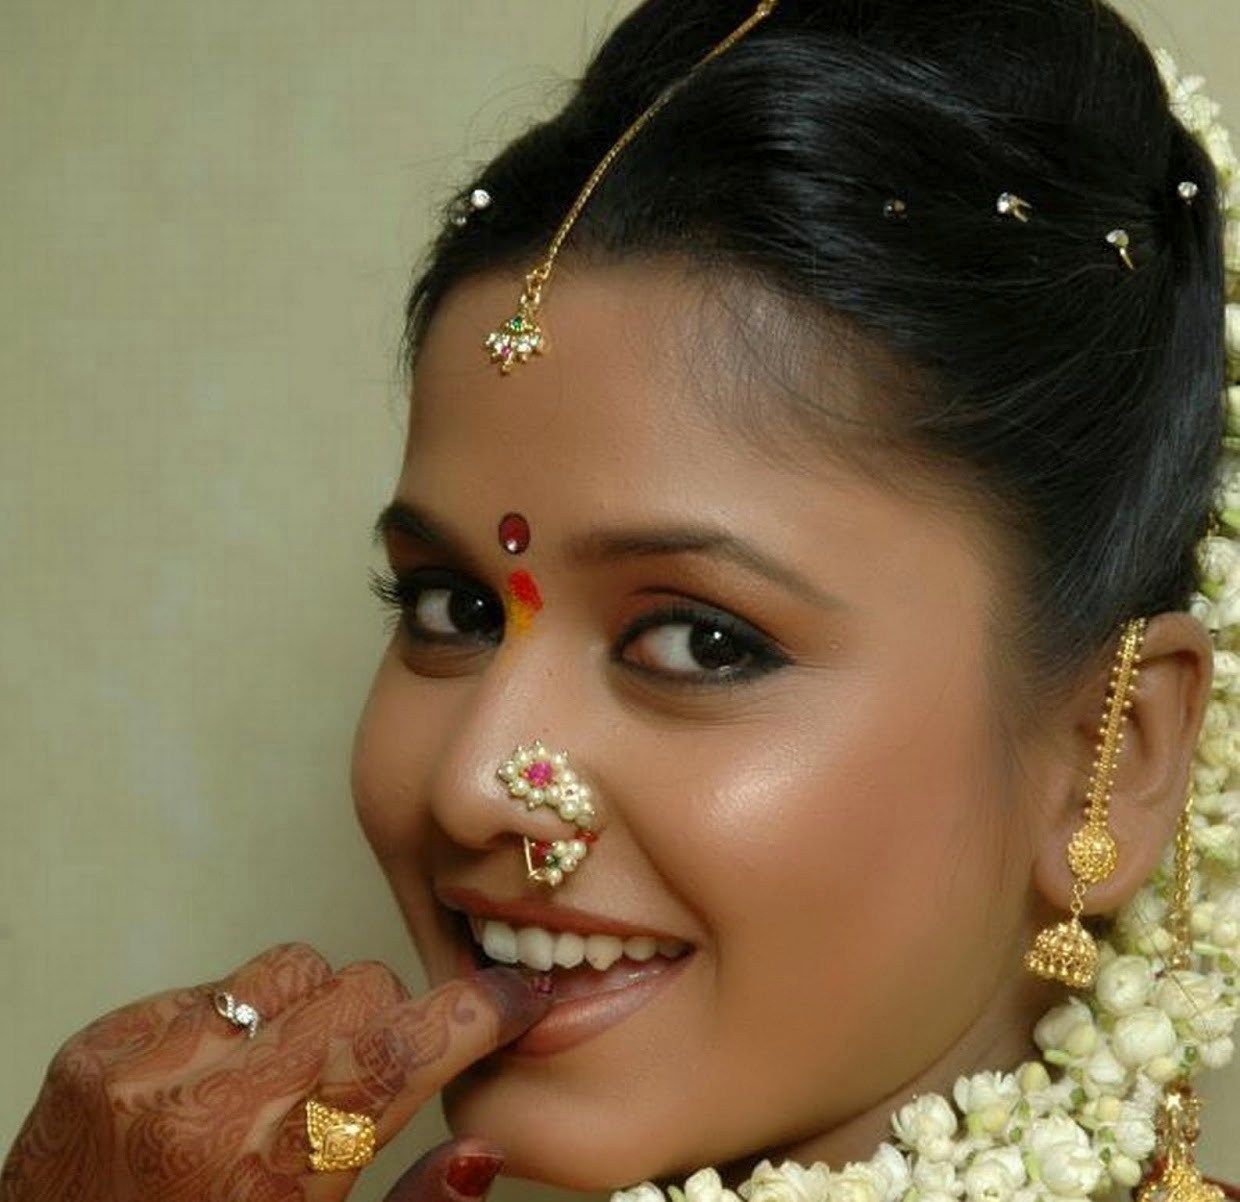 Marathi Actors and Actresses: Marathi movie actors, actresses, hot